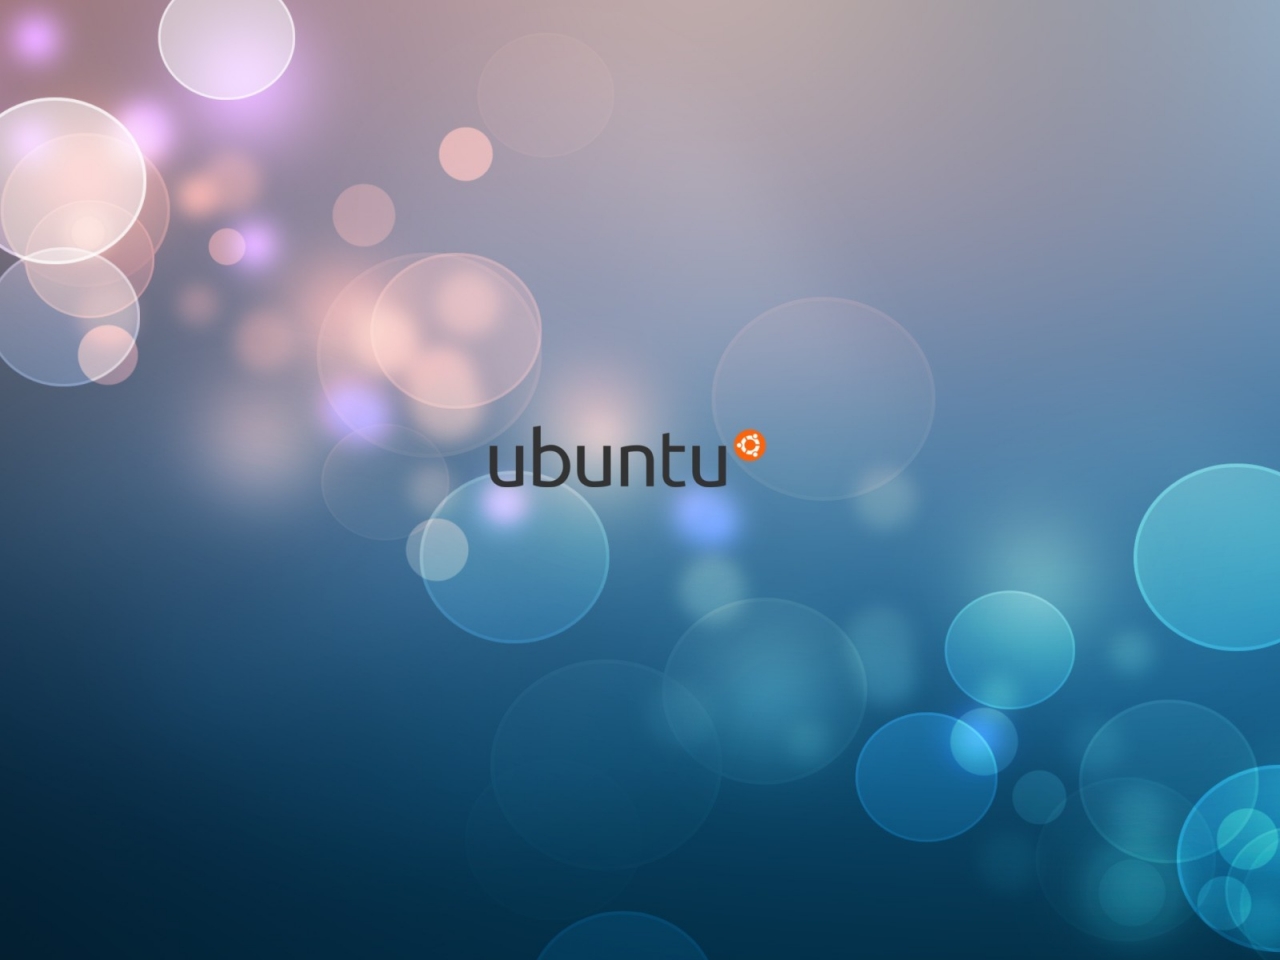 Ubuntu Minimalistic for 1280 x 960 resolution